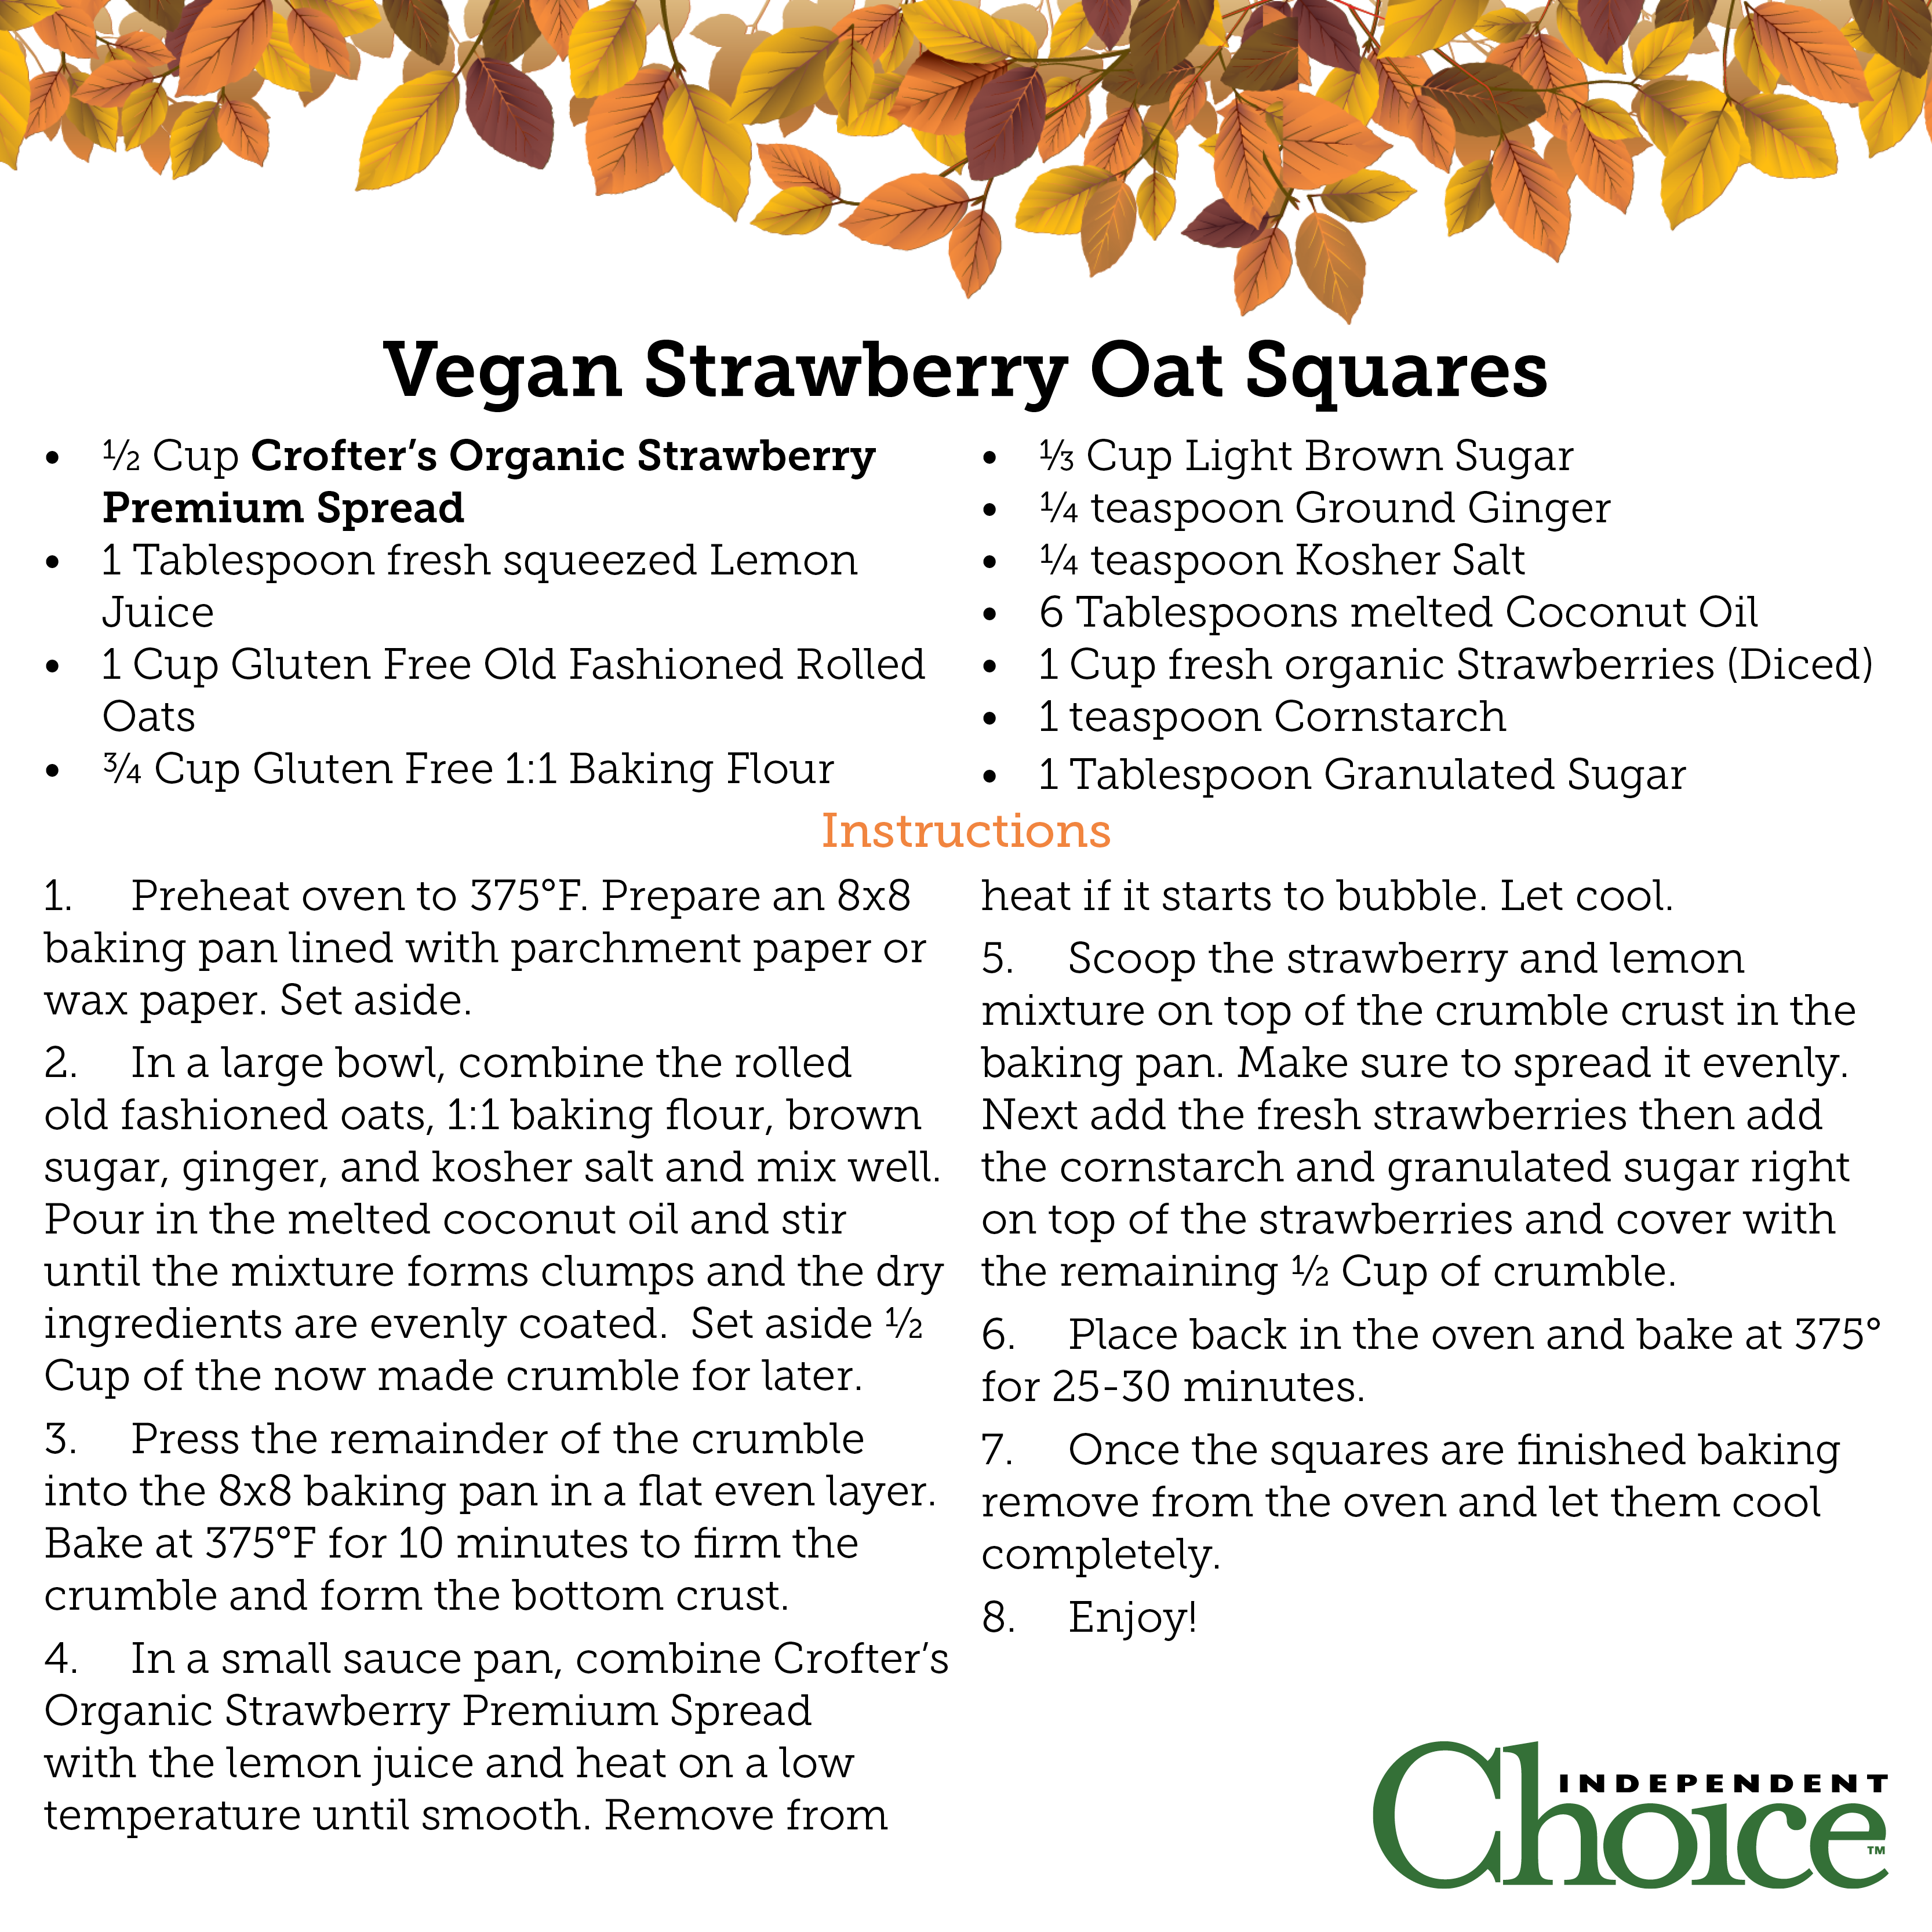  Vegan Strawberry Oat Squares